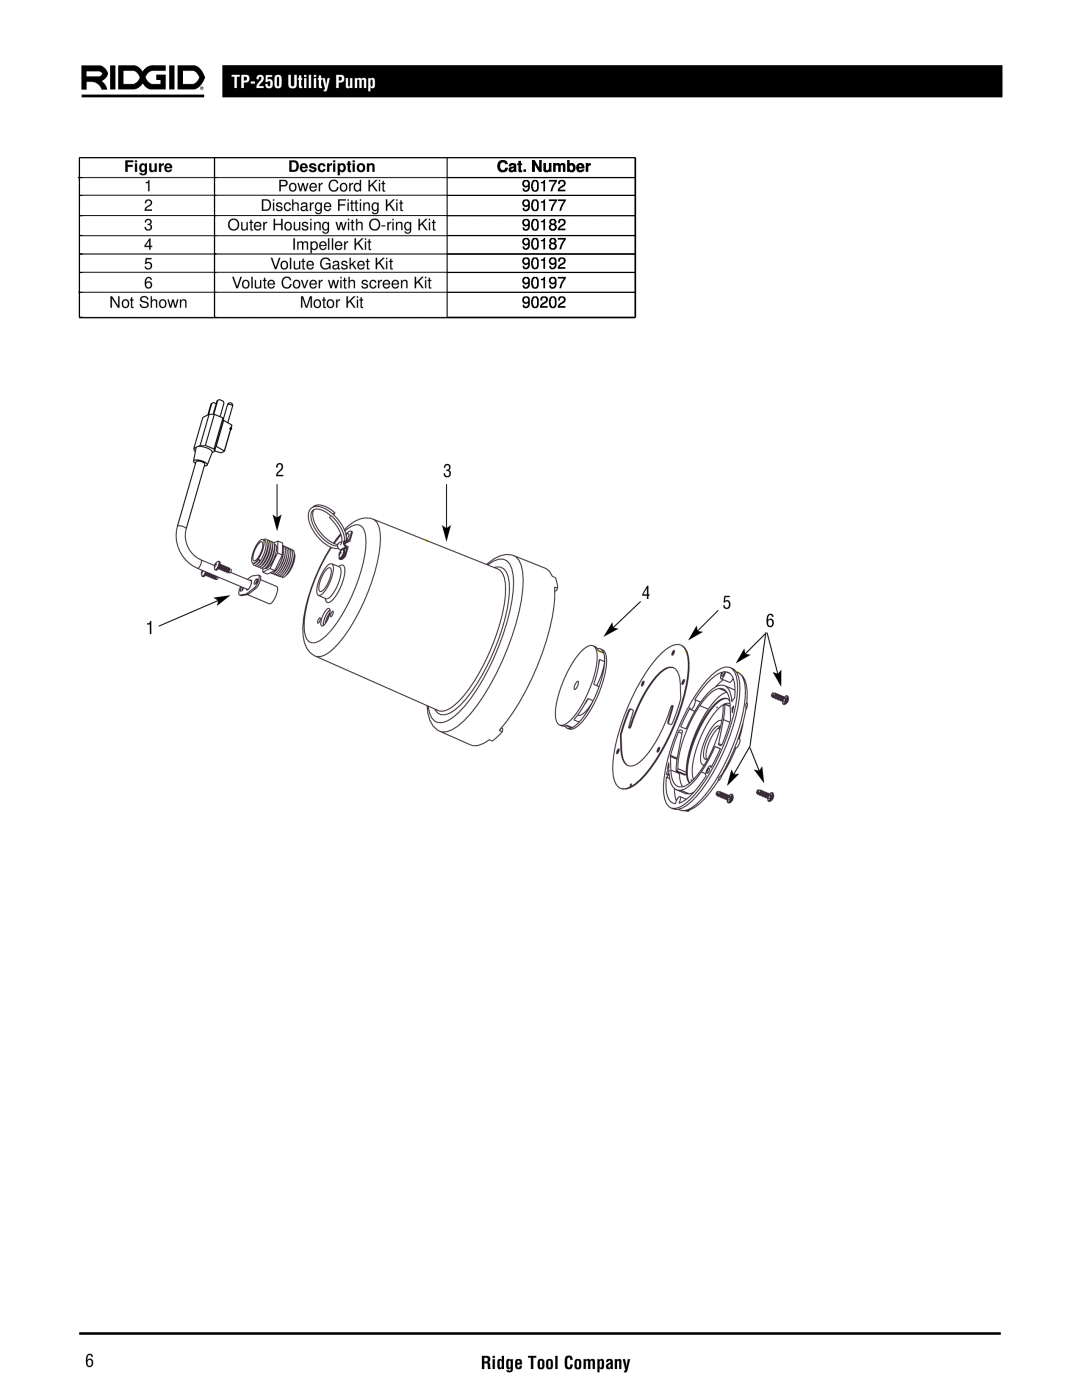 RIDGID manual TP-250Utility Pump, Description, Cat. Number, Volute Gasket Kit, Motor Kit 